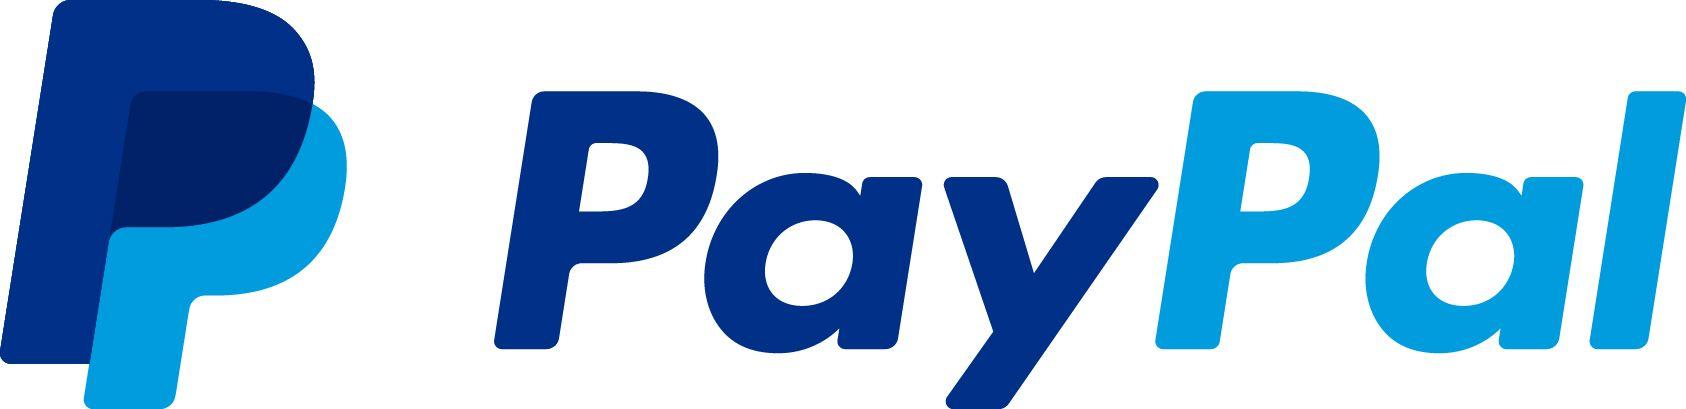 Venmo PayPal Logo - Media Resources - PayPal Stories